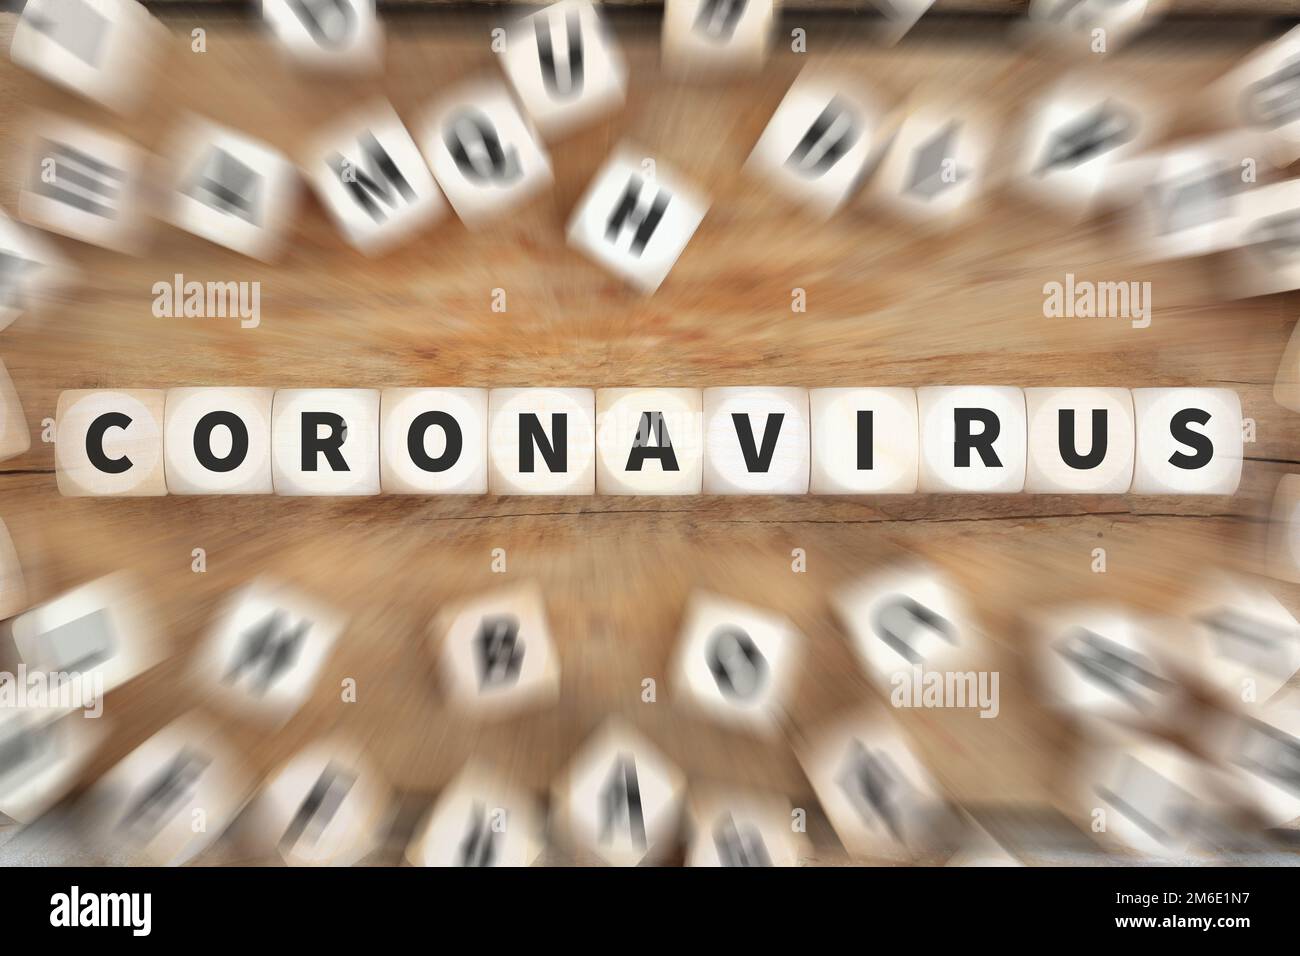 Coronavirus Corona virus disease illness healthy health dice concept Stock Photo